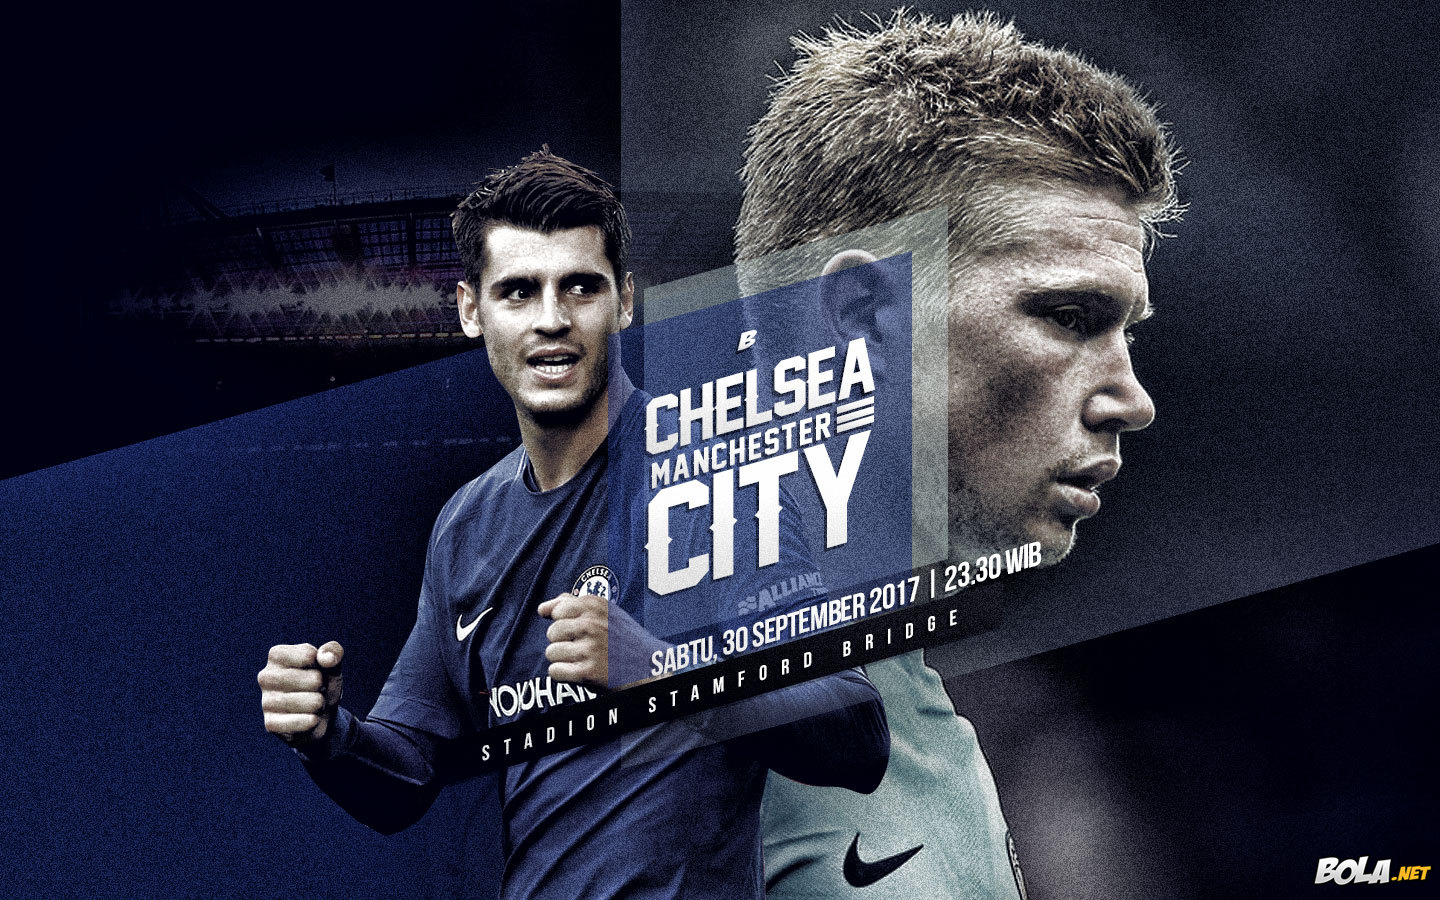 Deskripsi : Wallpaper Chelsea Vs Manchester City, size: 1440x900